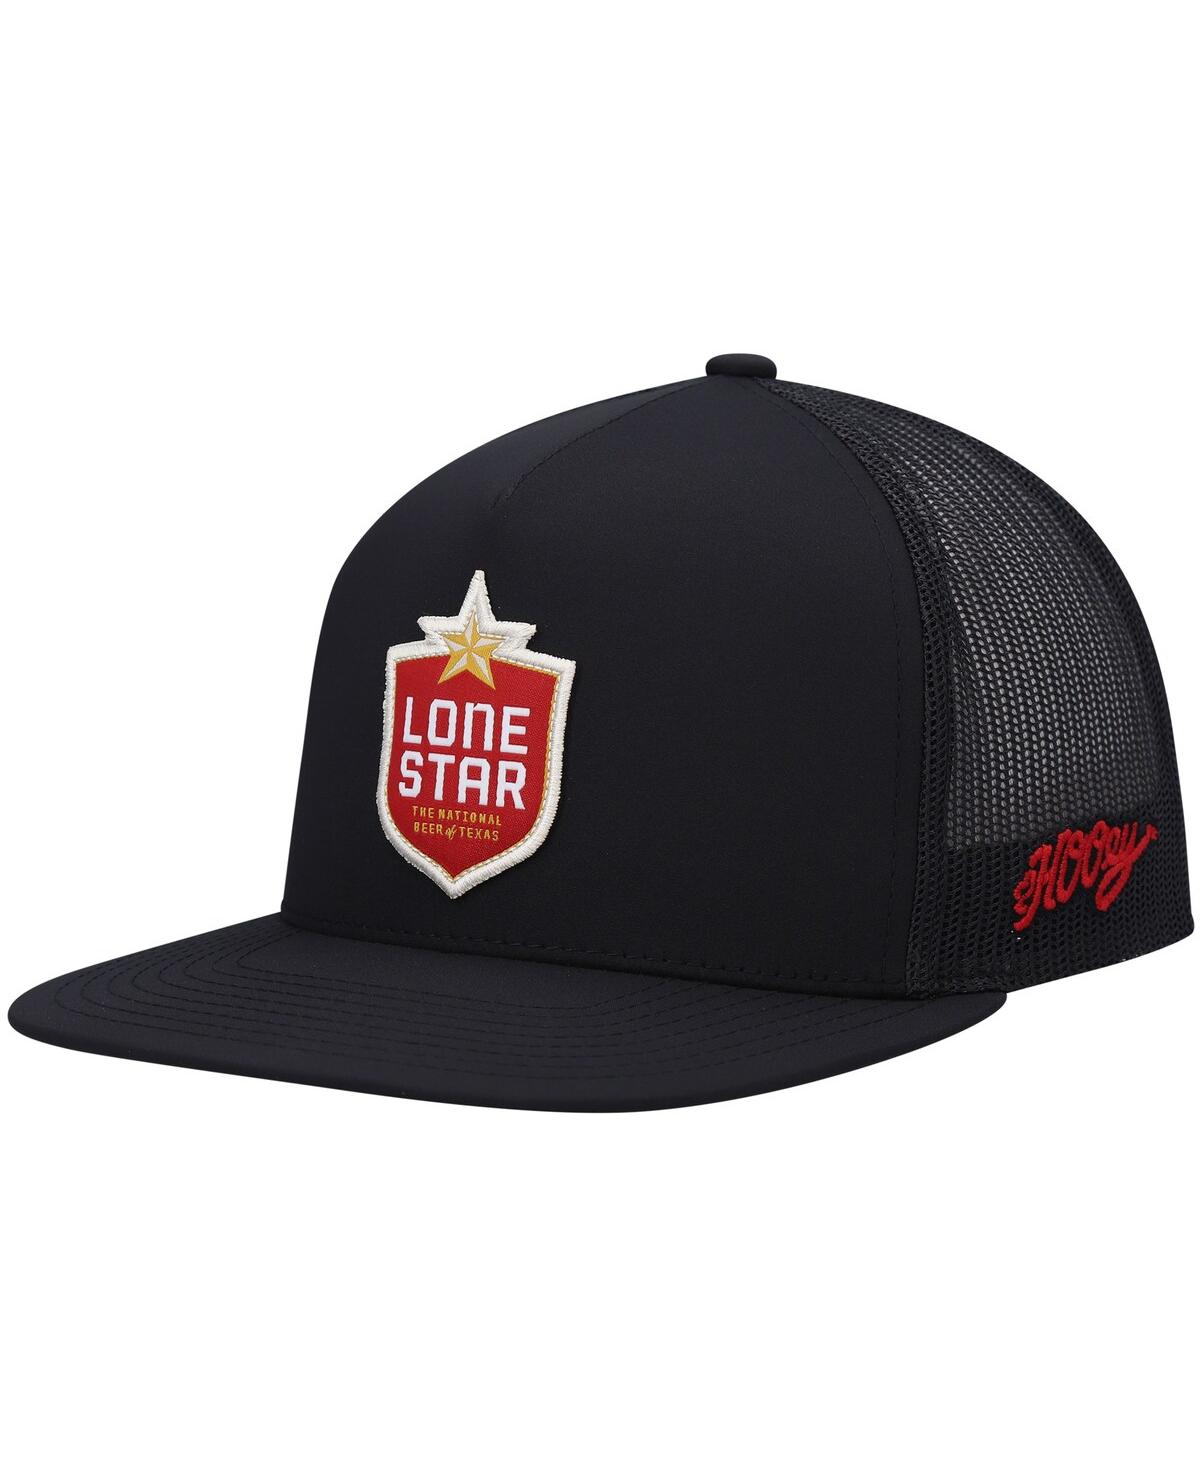 Men's Hooey Black Lone Star Trucker Snapback Hat - Black